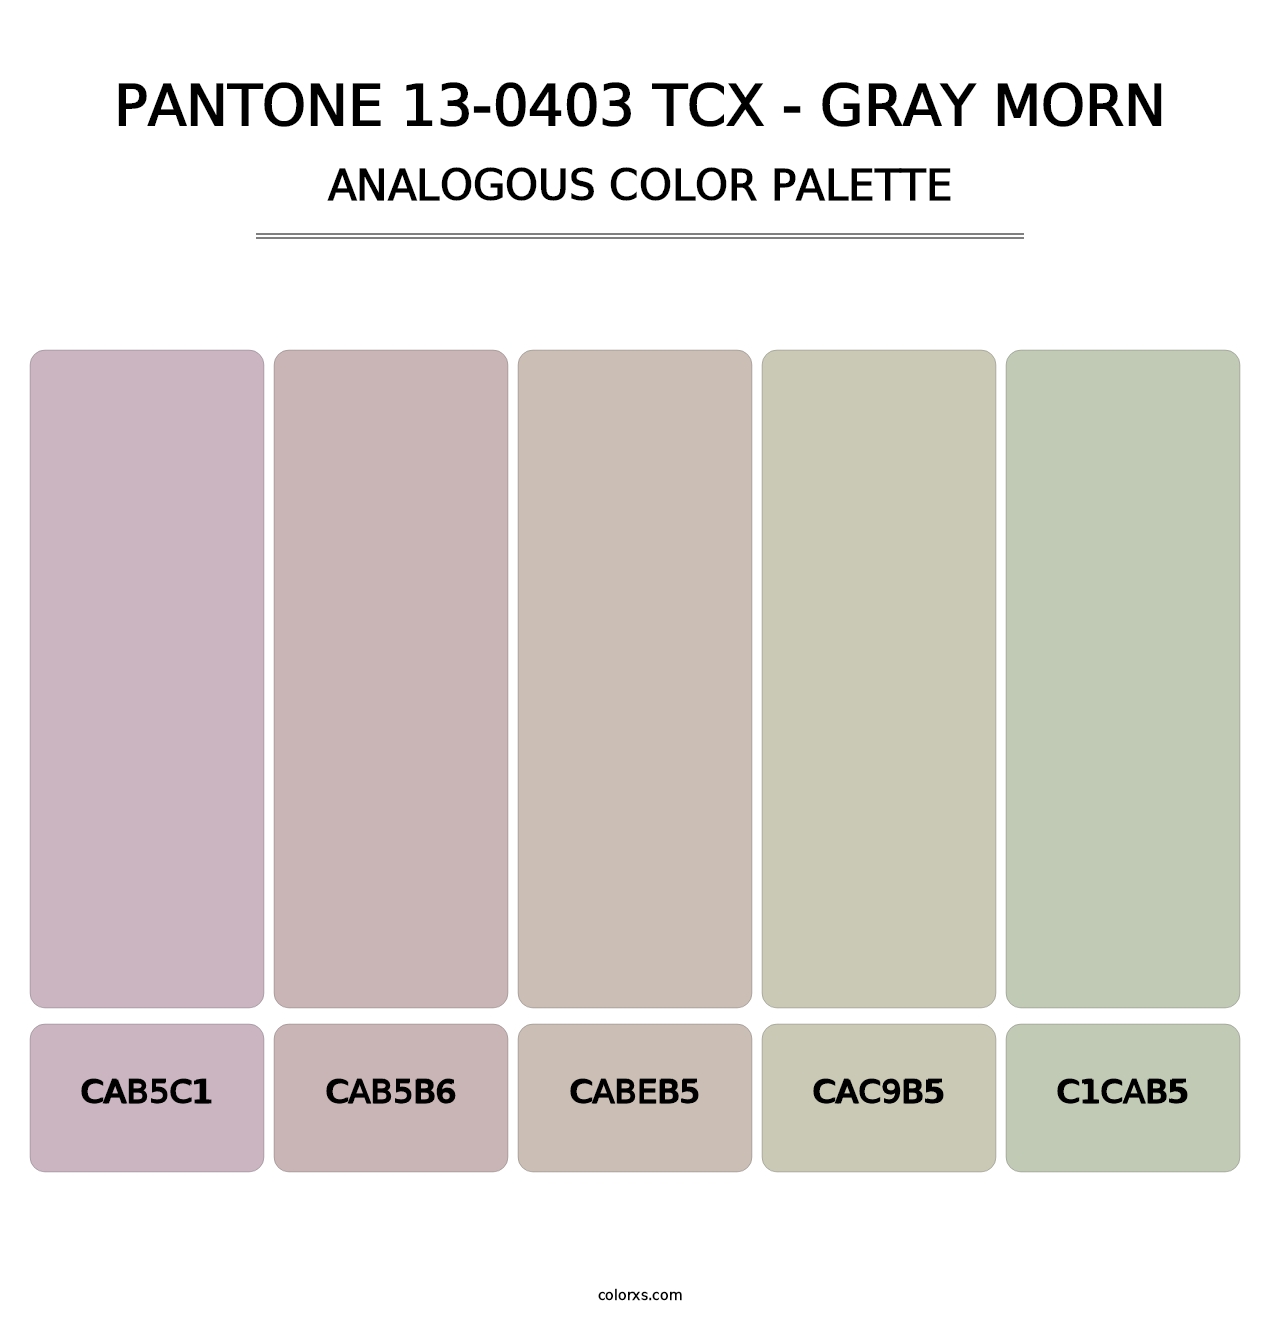 PANTONE 13-0403 TCX - Gray Morn - Analogous Color Palette